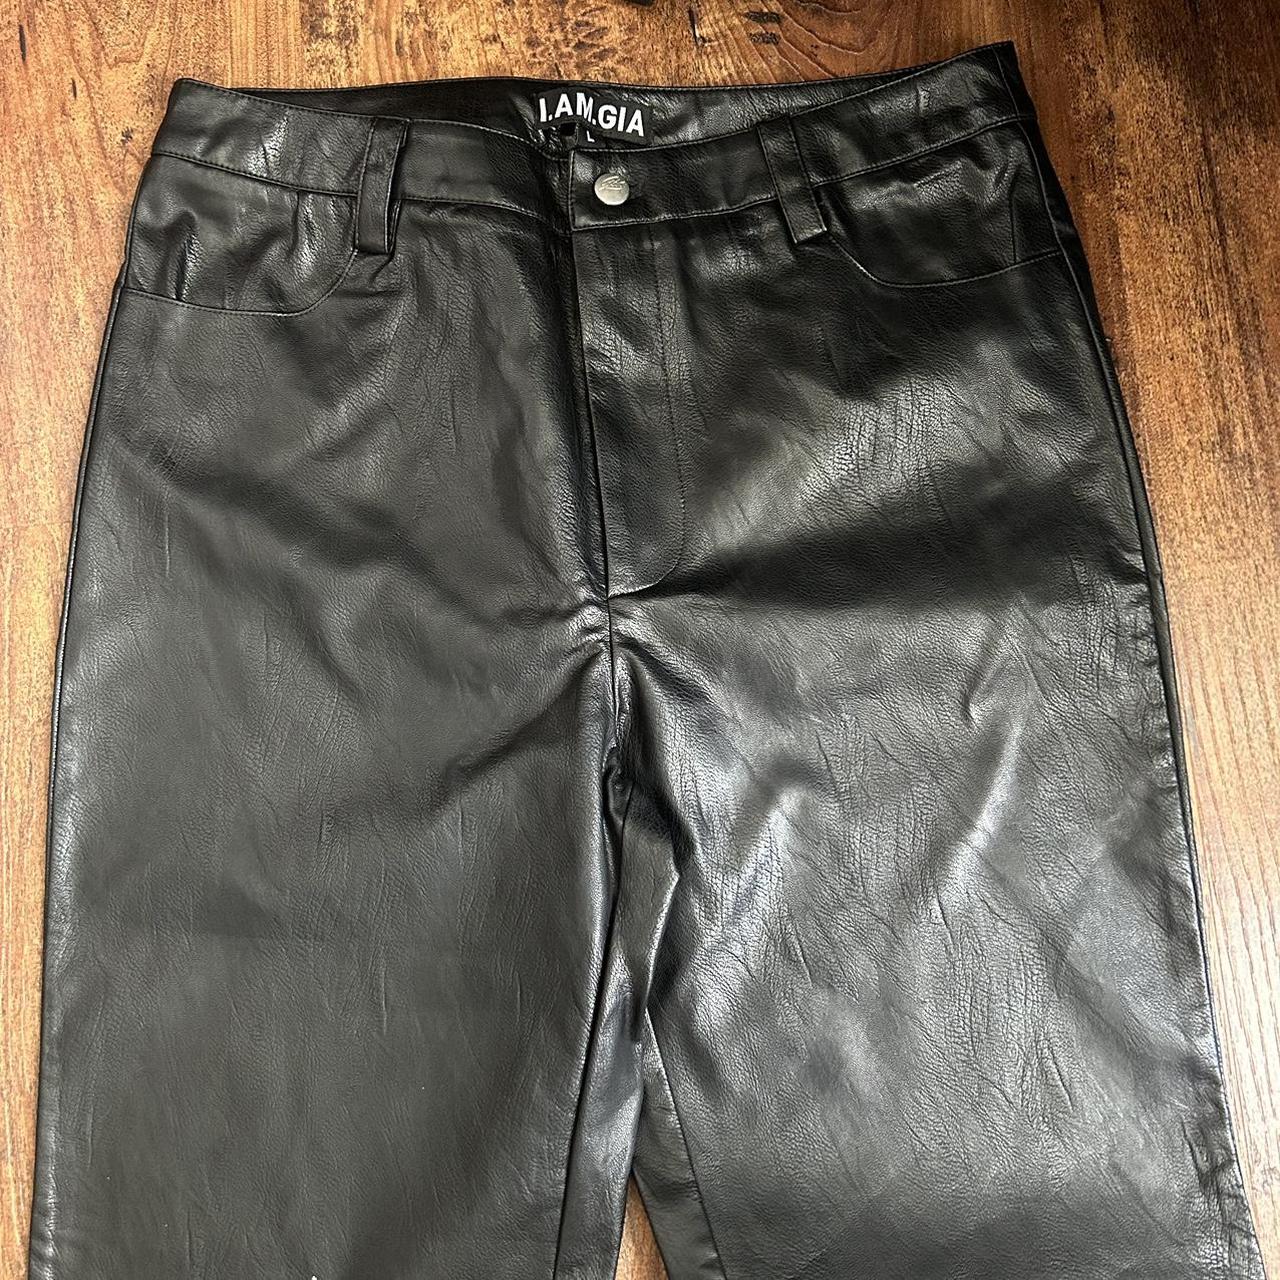 I Am Gia leather pants // never worn too long (5’2)... - Depop